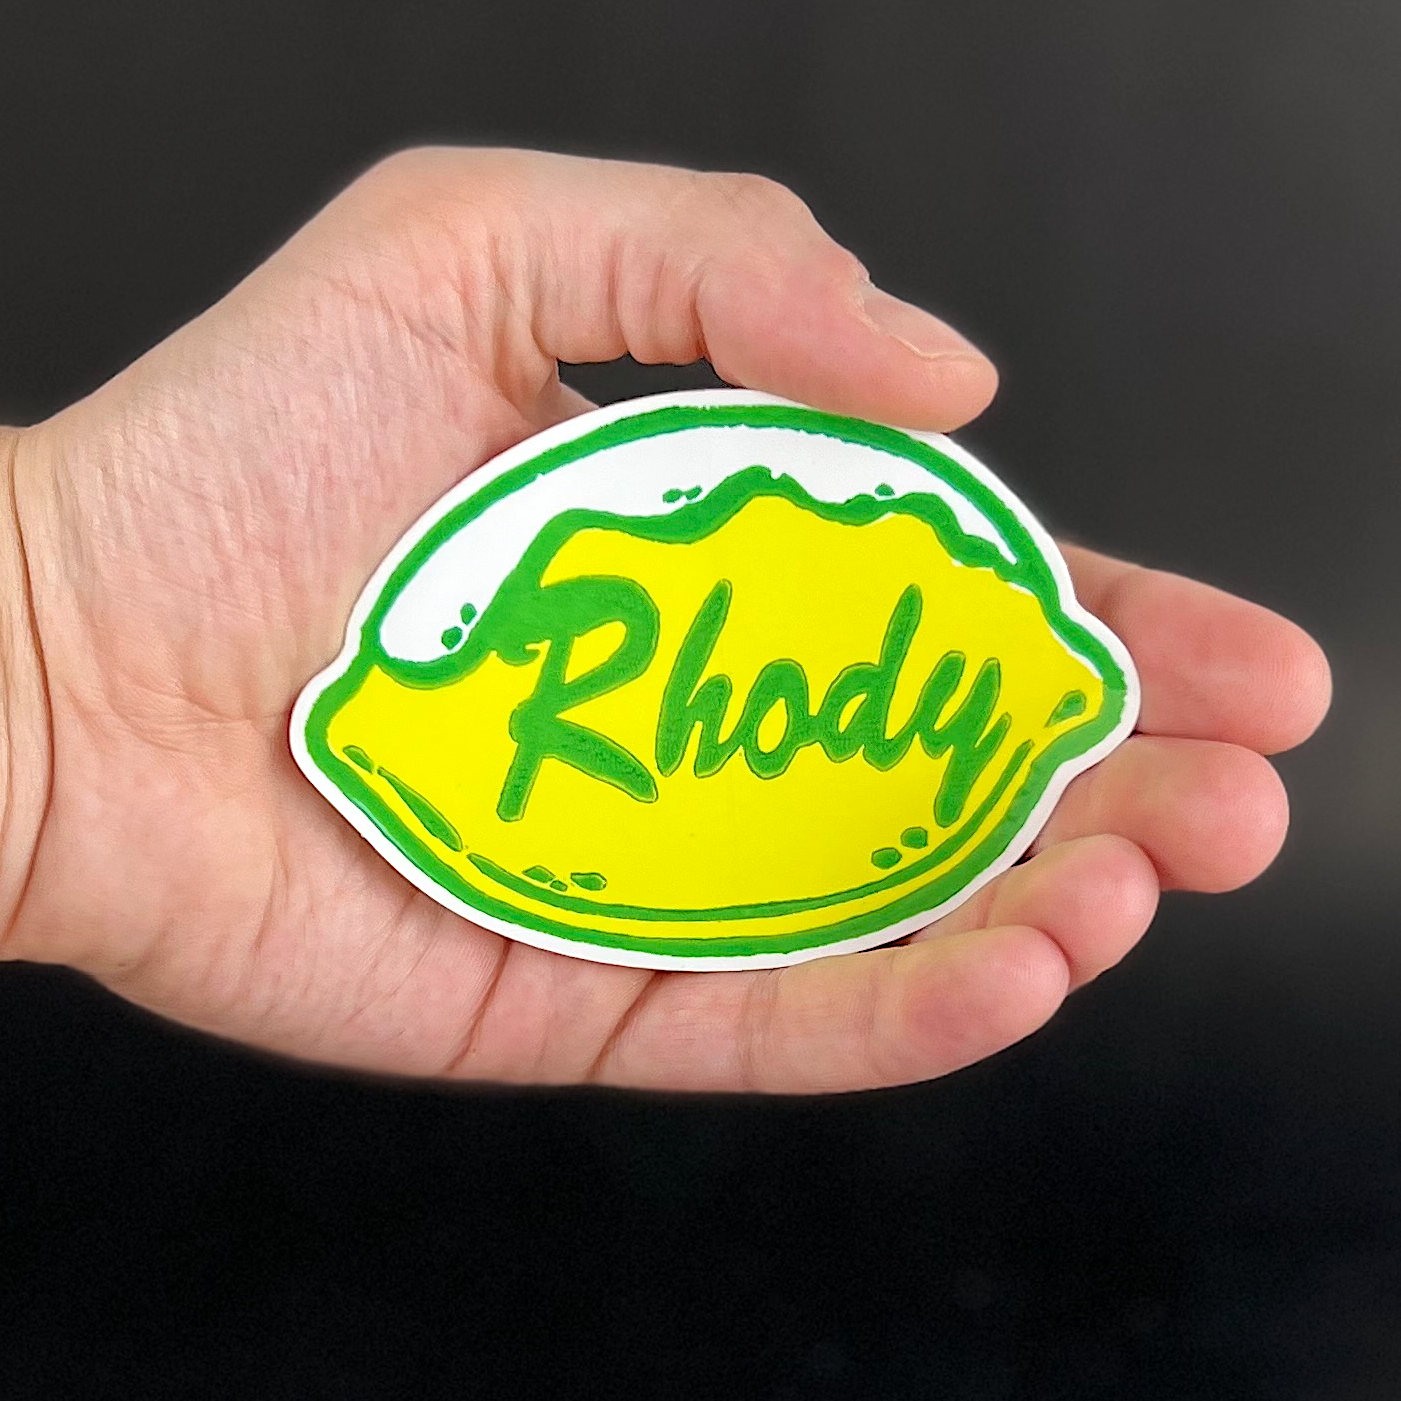 Rhody Lemon - sticker